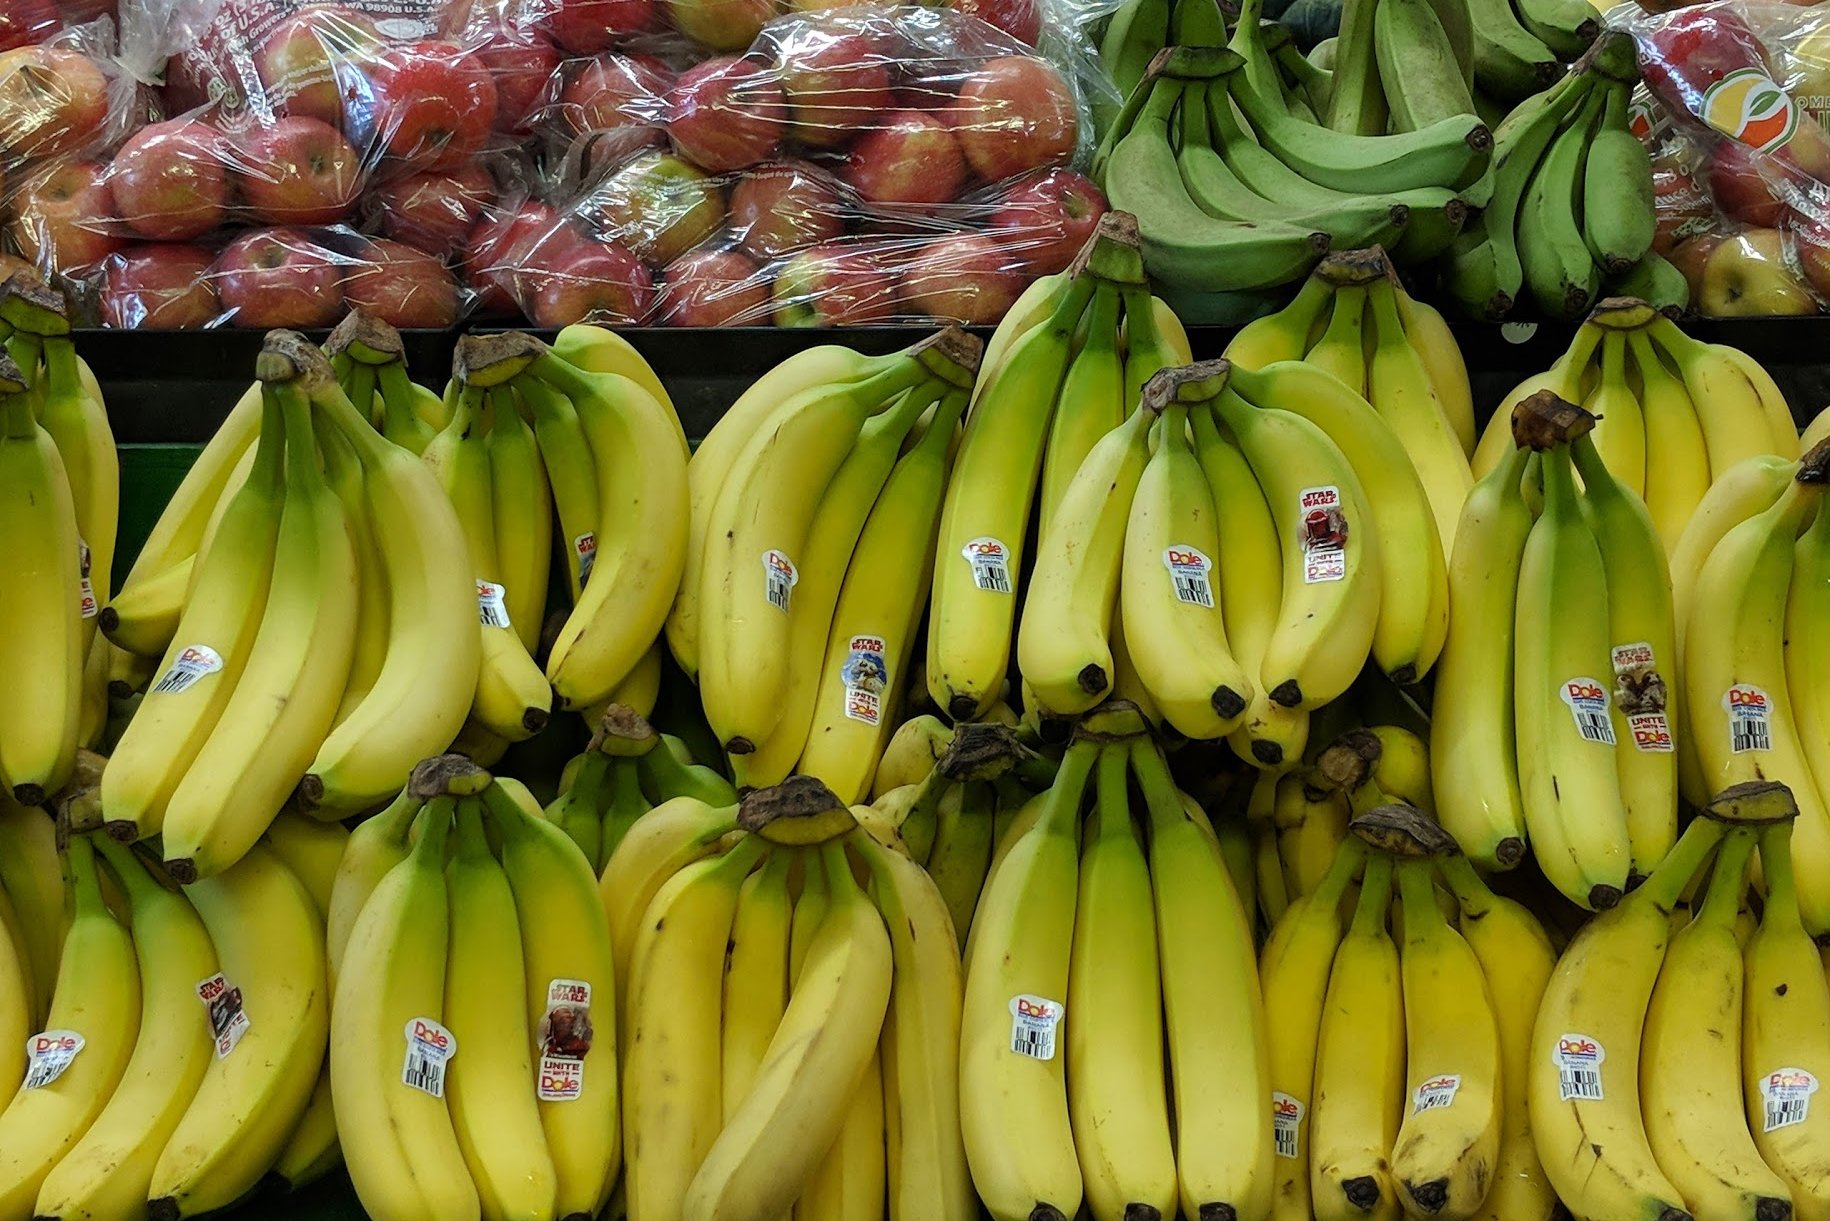 bananas produce antimatter